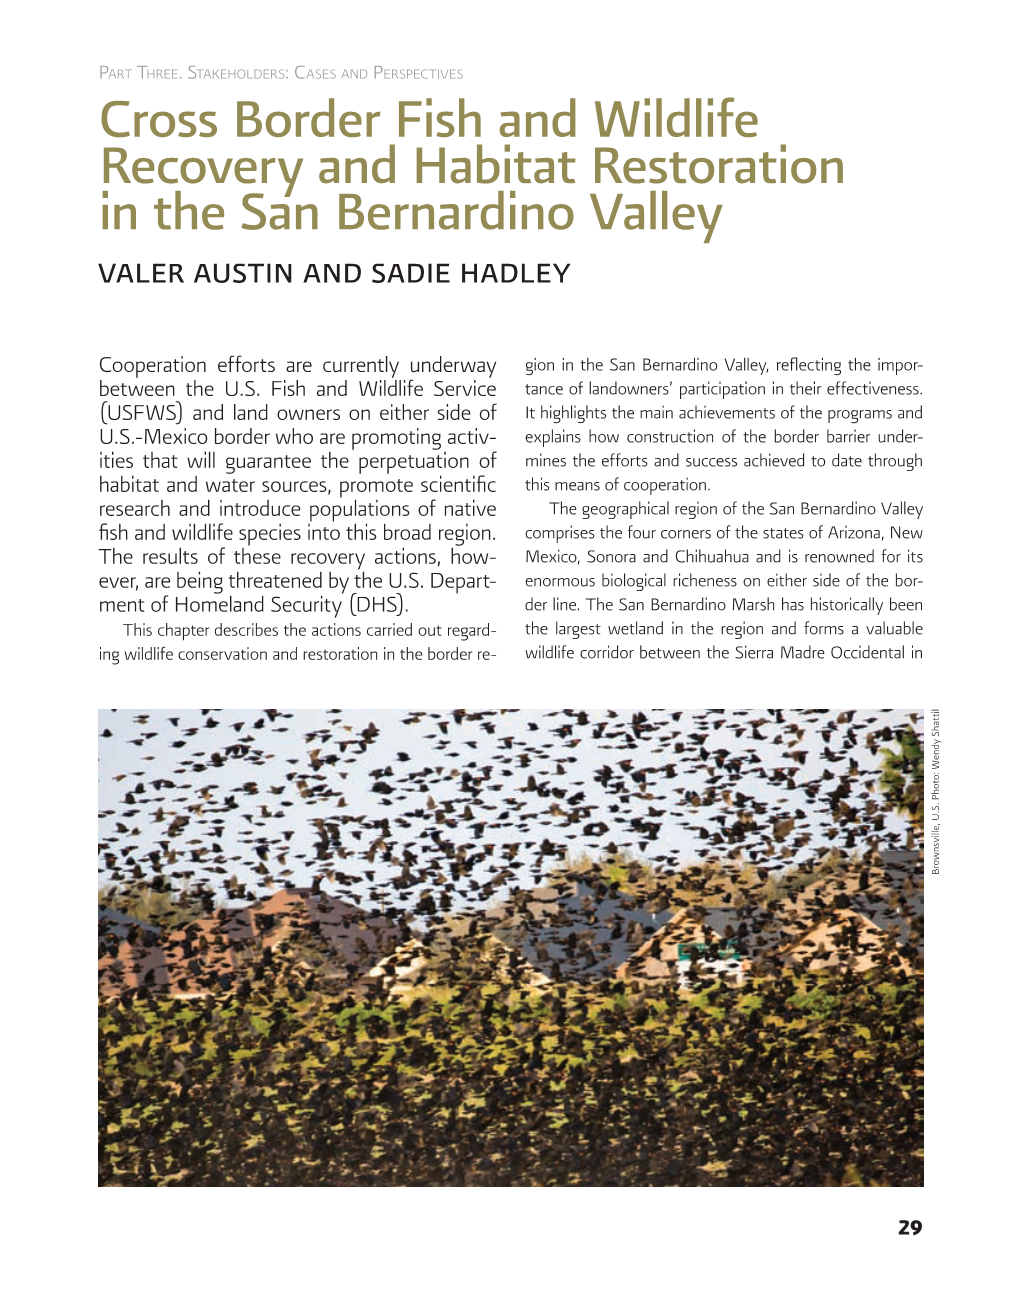 Cross Border Fish and Wildlife Recovery and Habitat Restoration in the San Bernardino Valley Valer Austin and Sadie Hadley